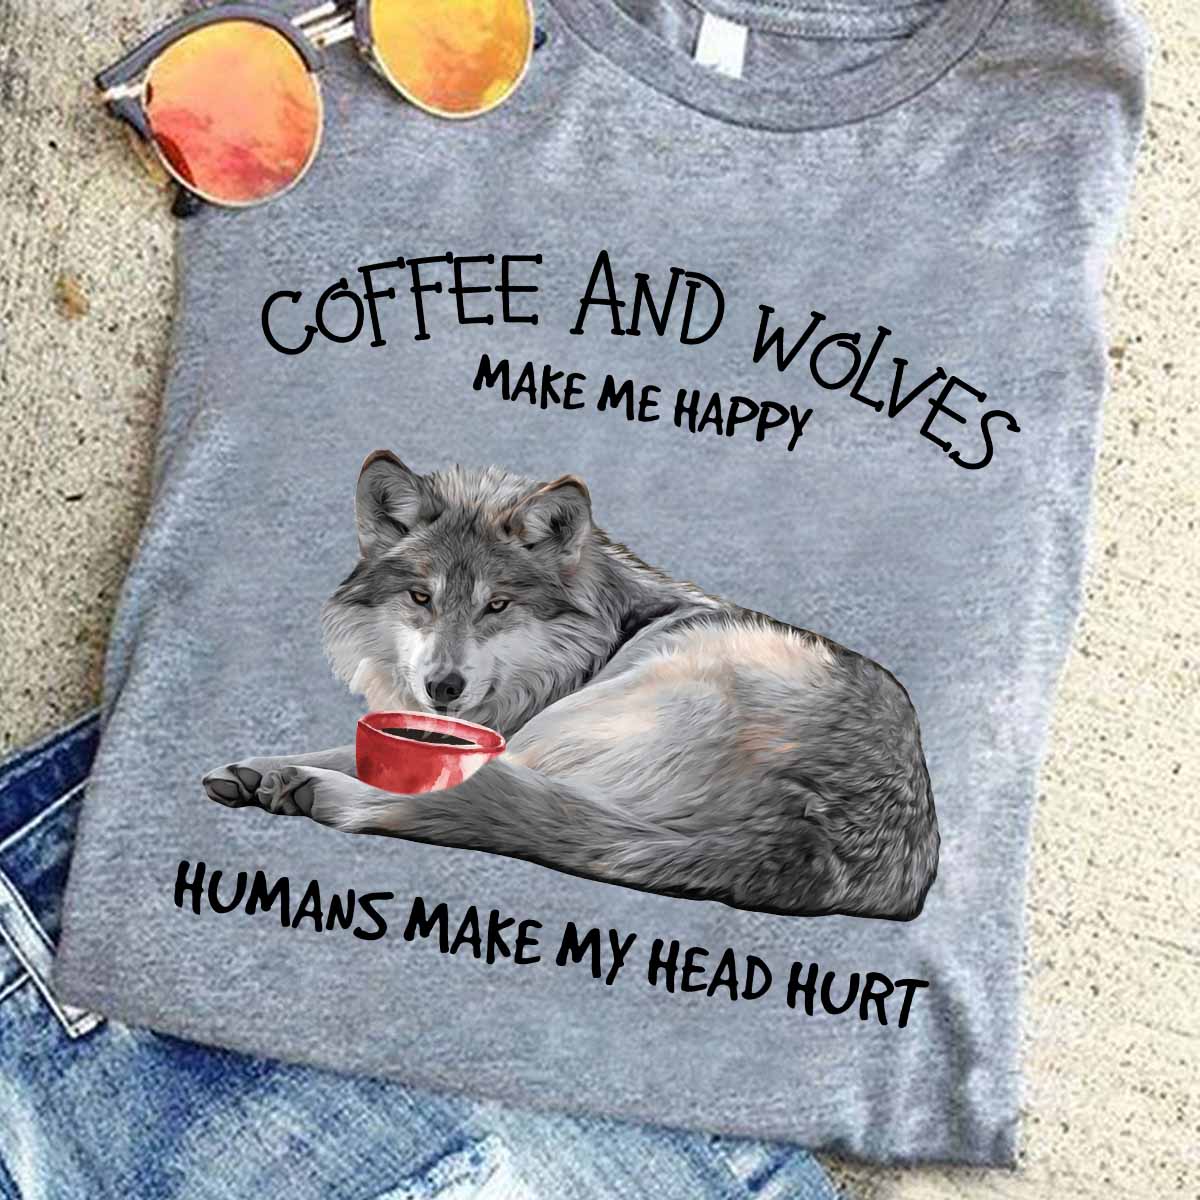 Coffee To Make Me Happy T-Shirt